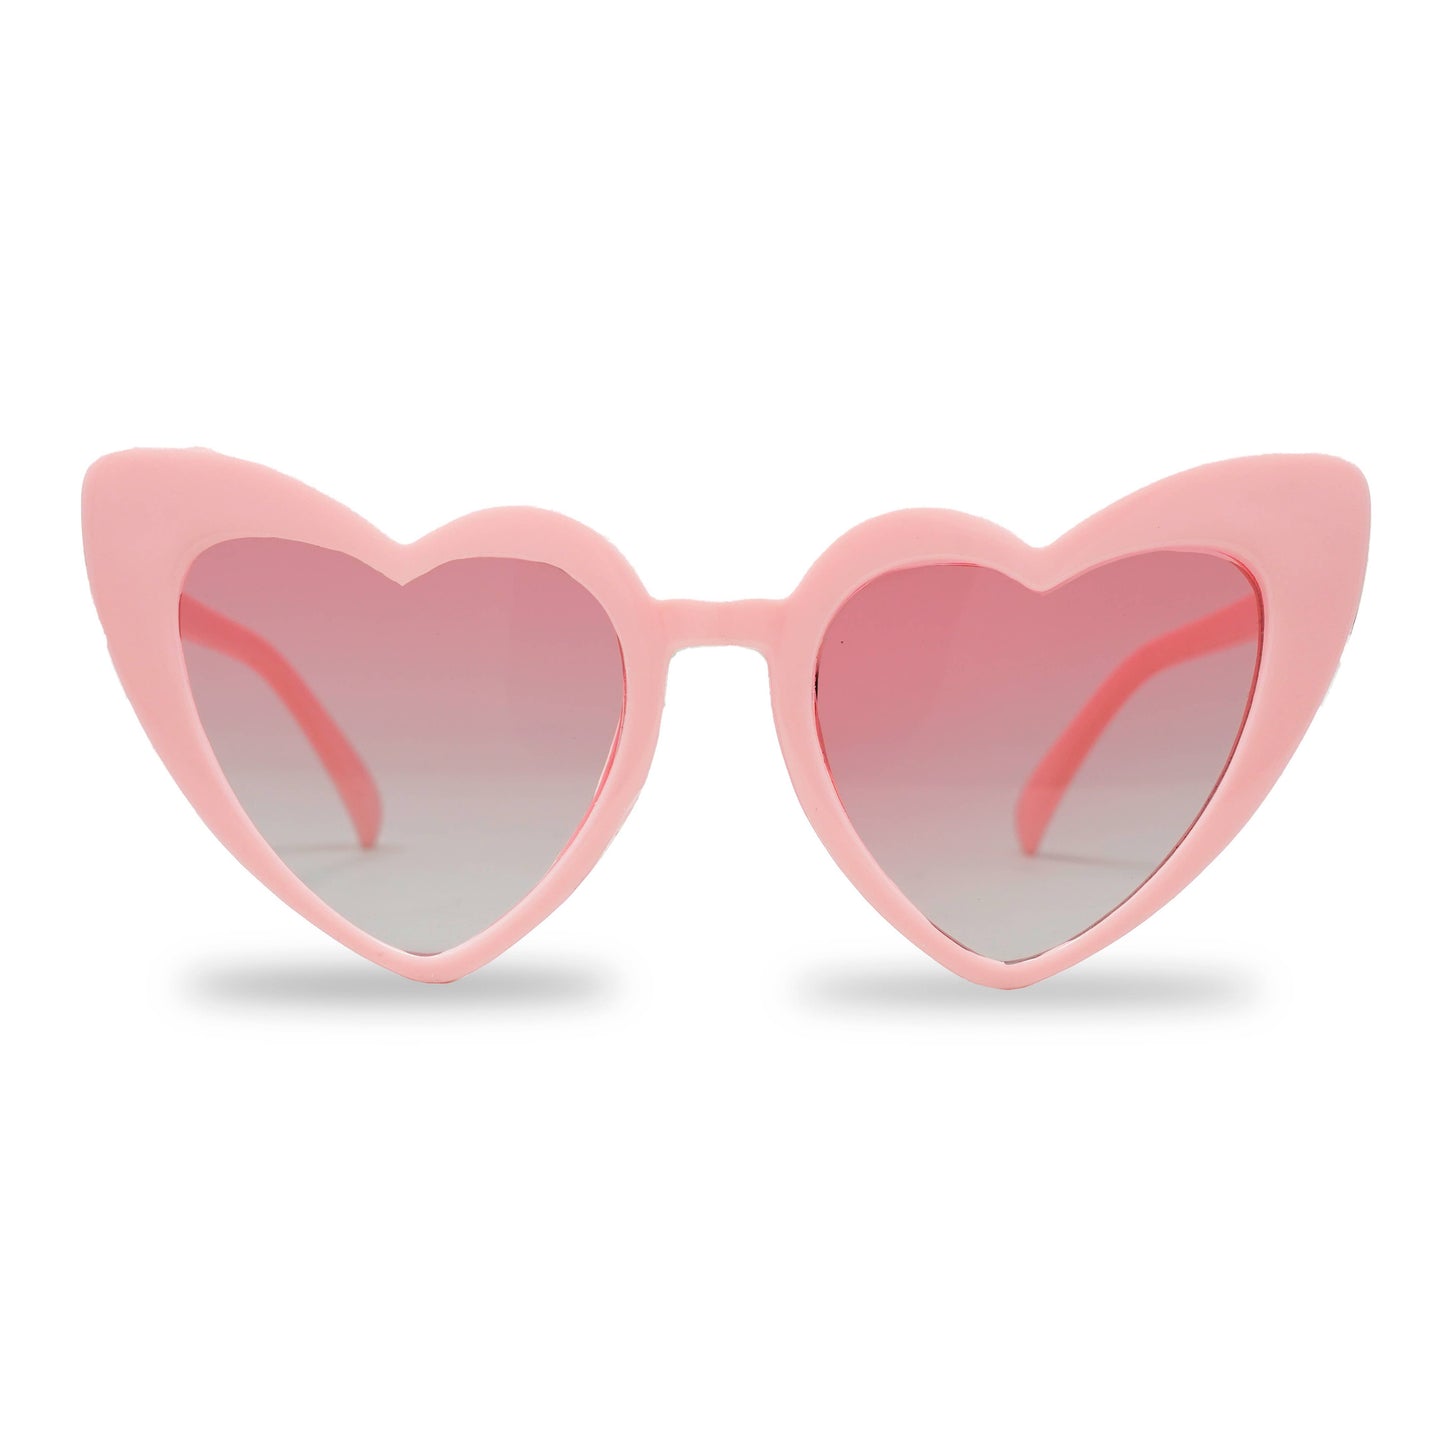 Kids Sunglasses - Pink (Heart Shaped)